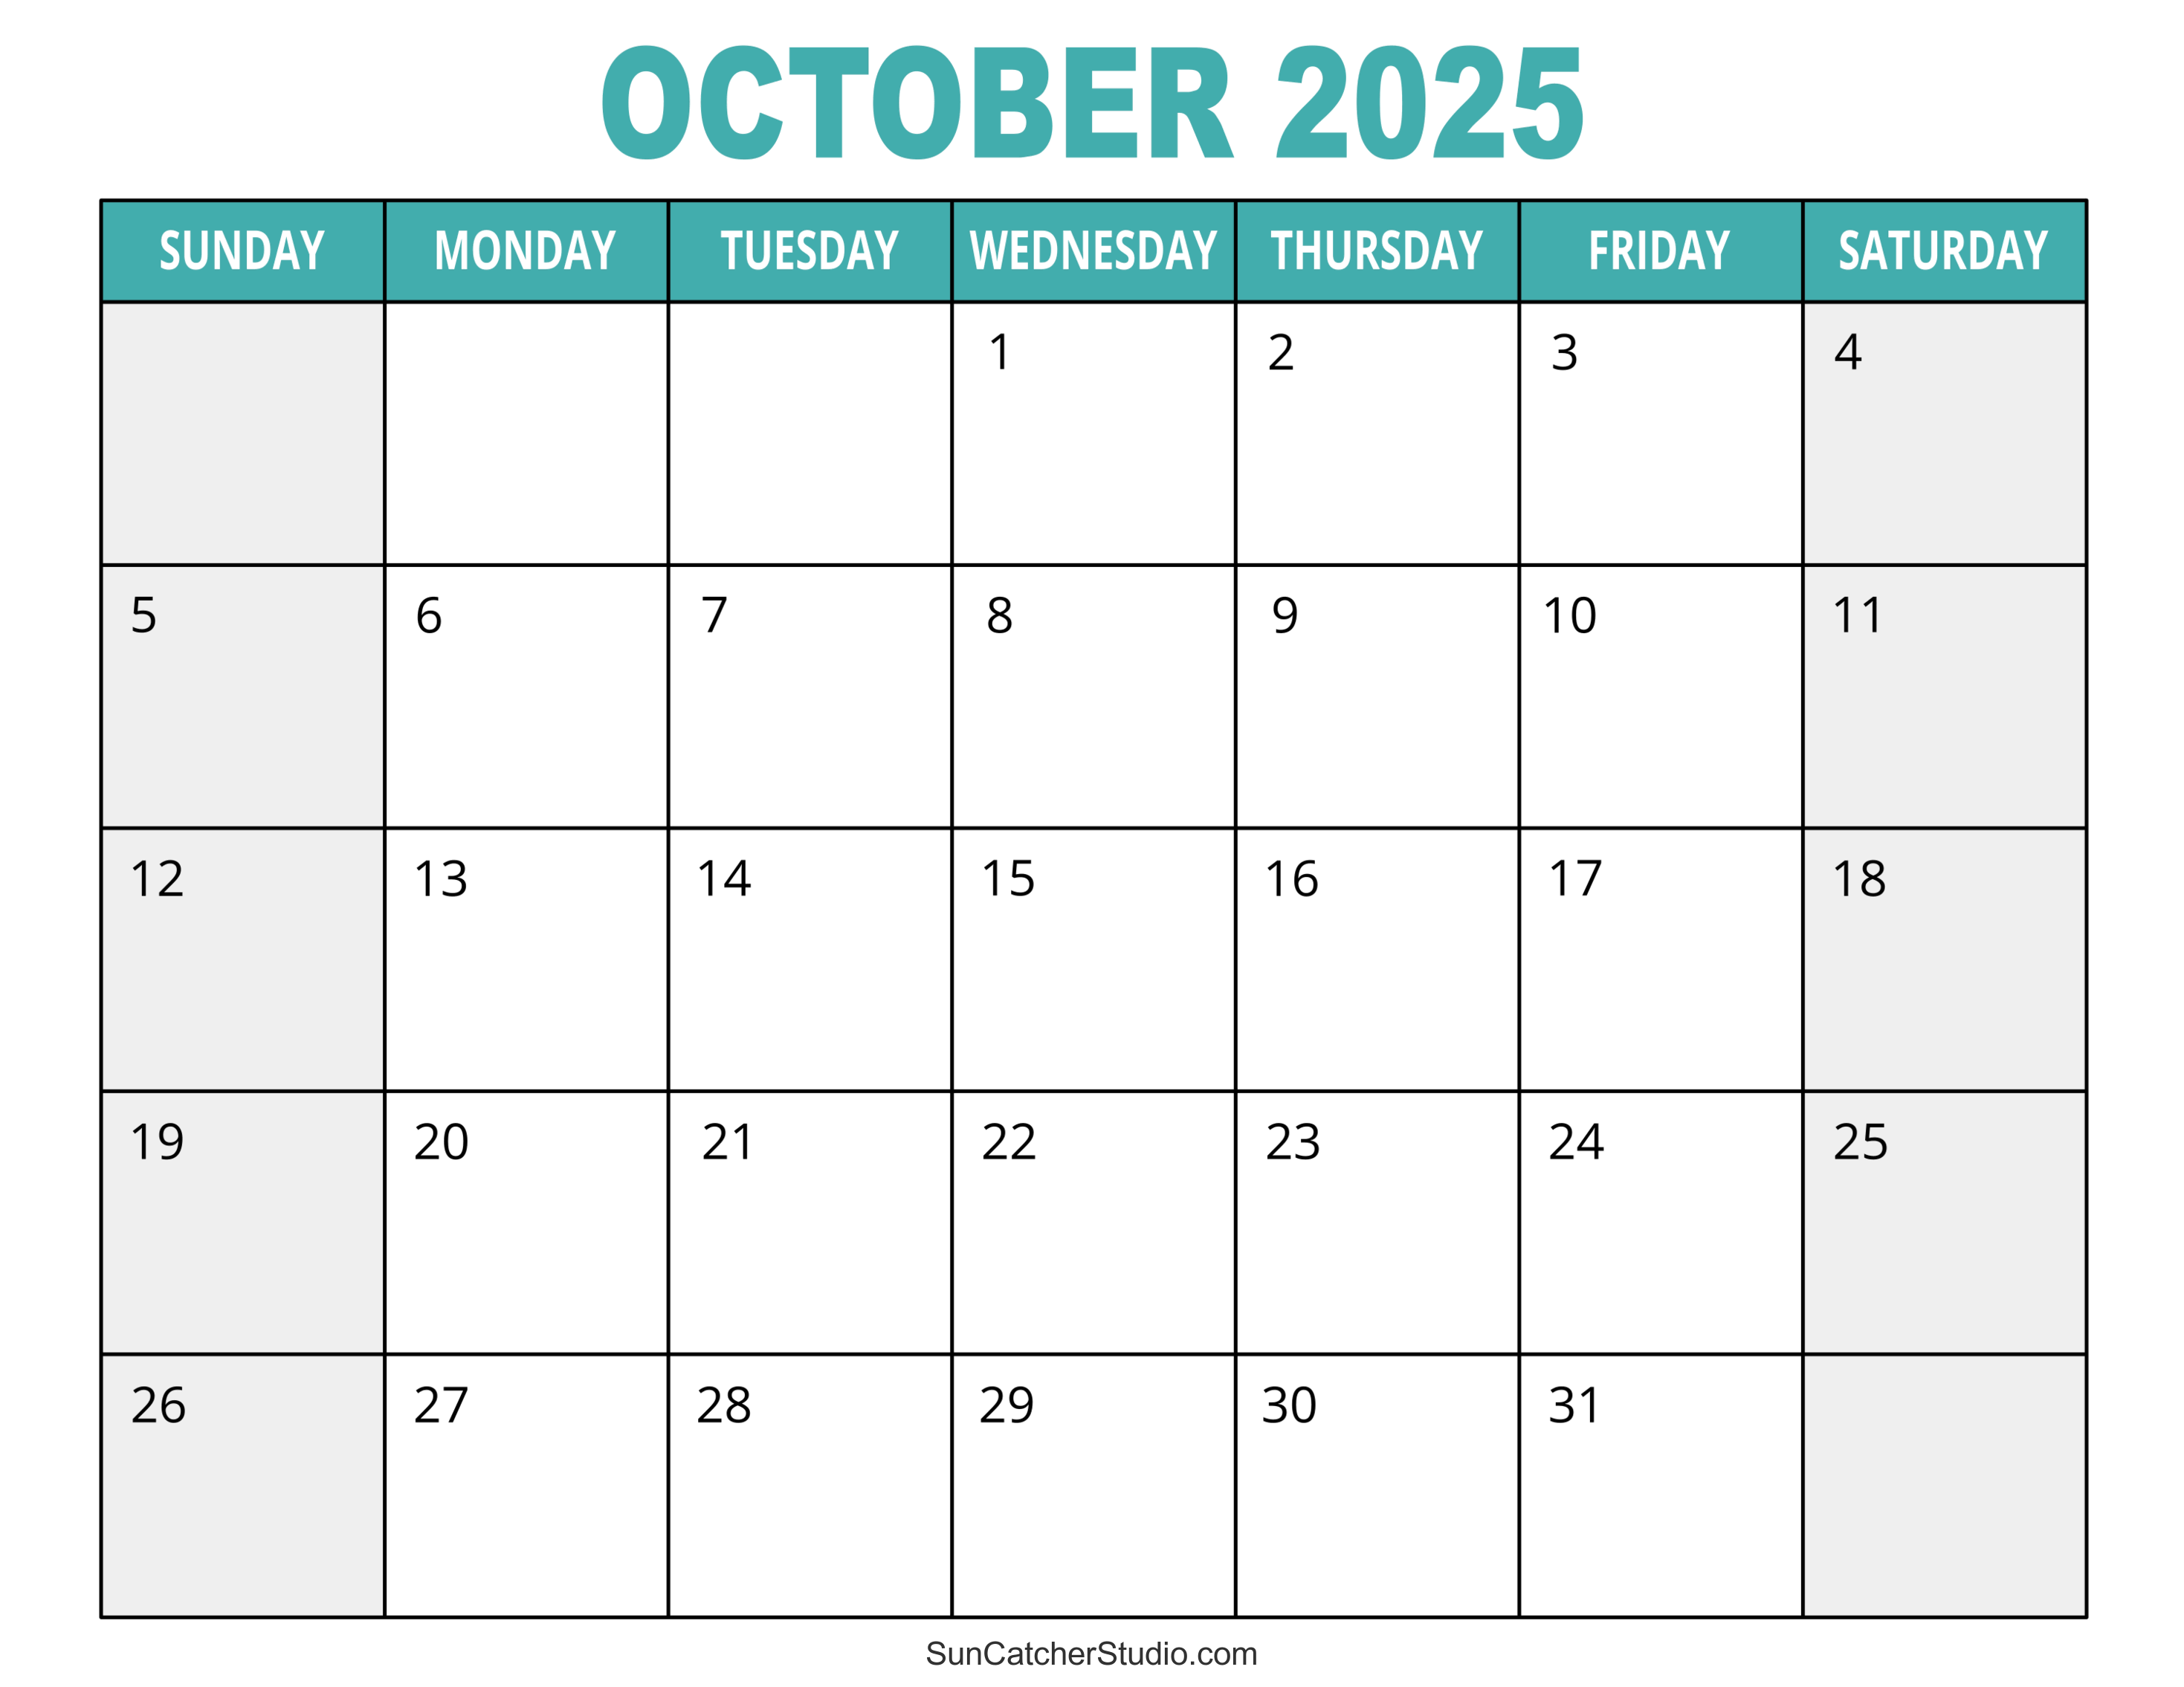 October calendar free printable â diy projects patterns monograms designs templates